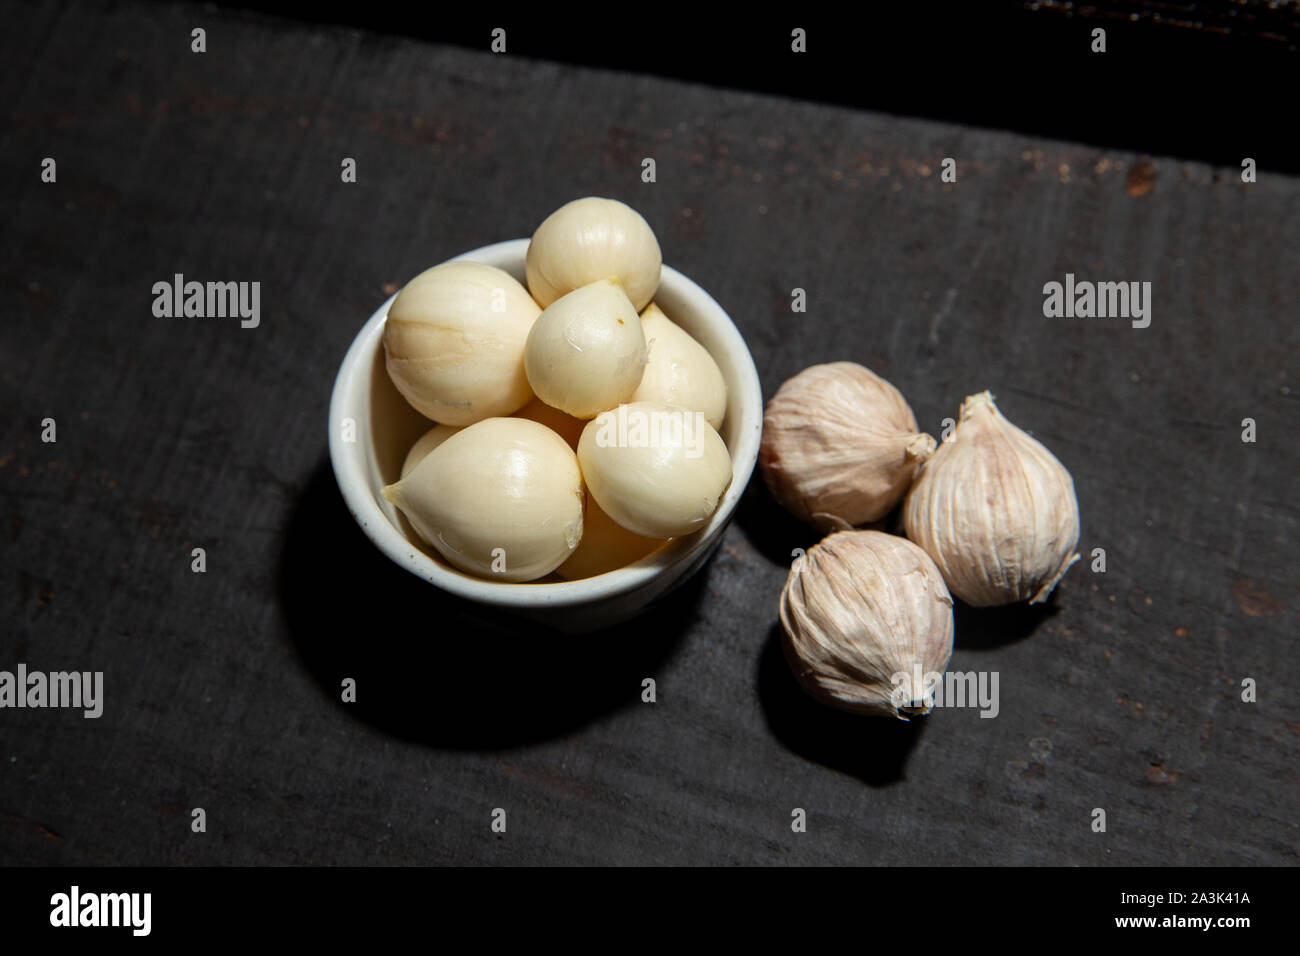 Elephant Garlic Single Bulb form healthy herb aroma food ingredient on black wood background Stock Photo